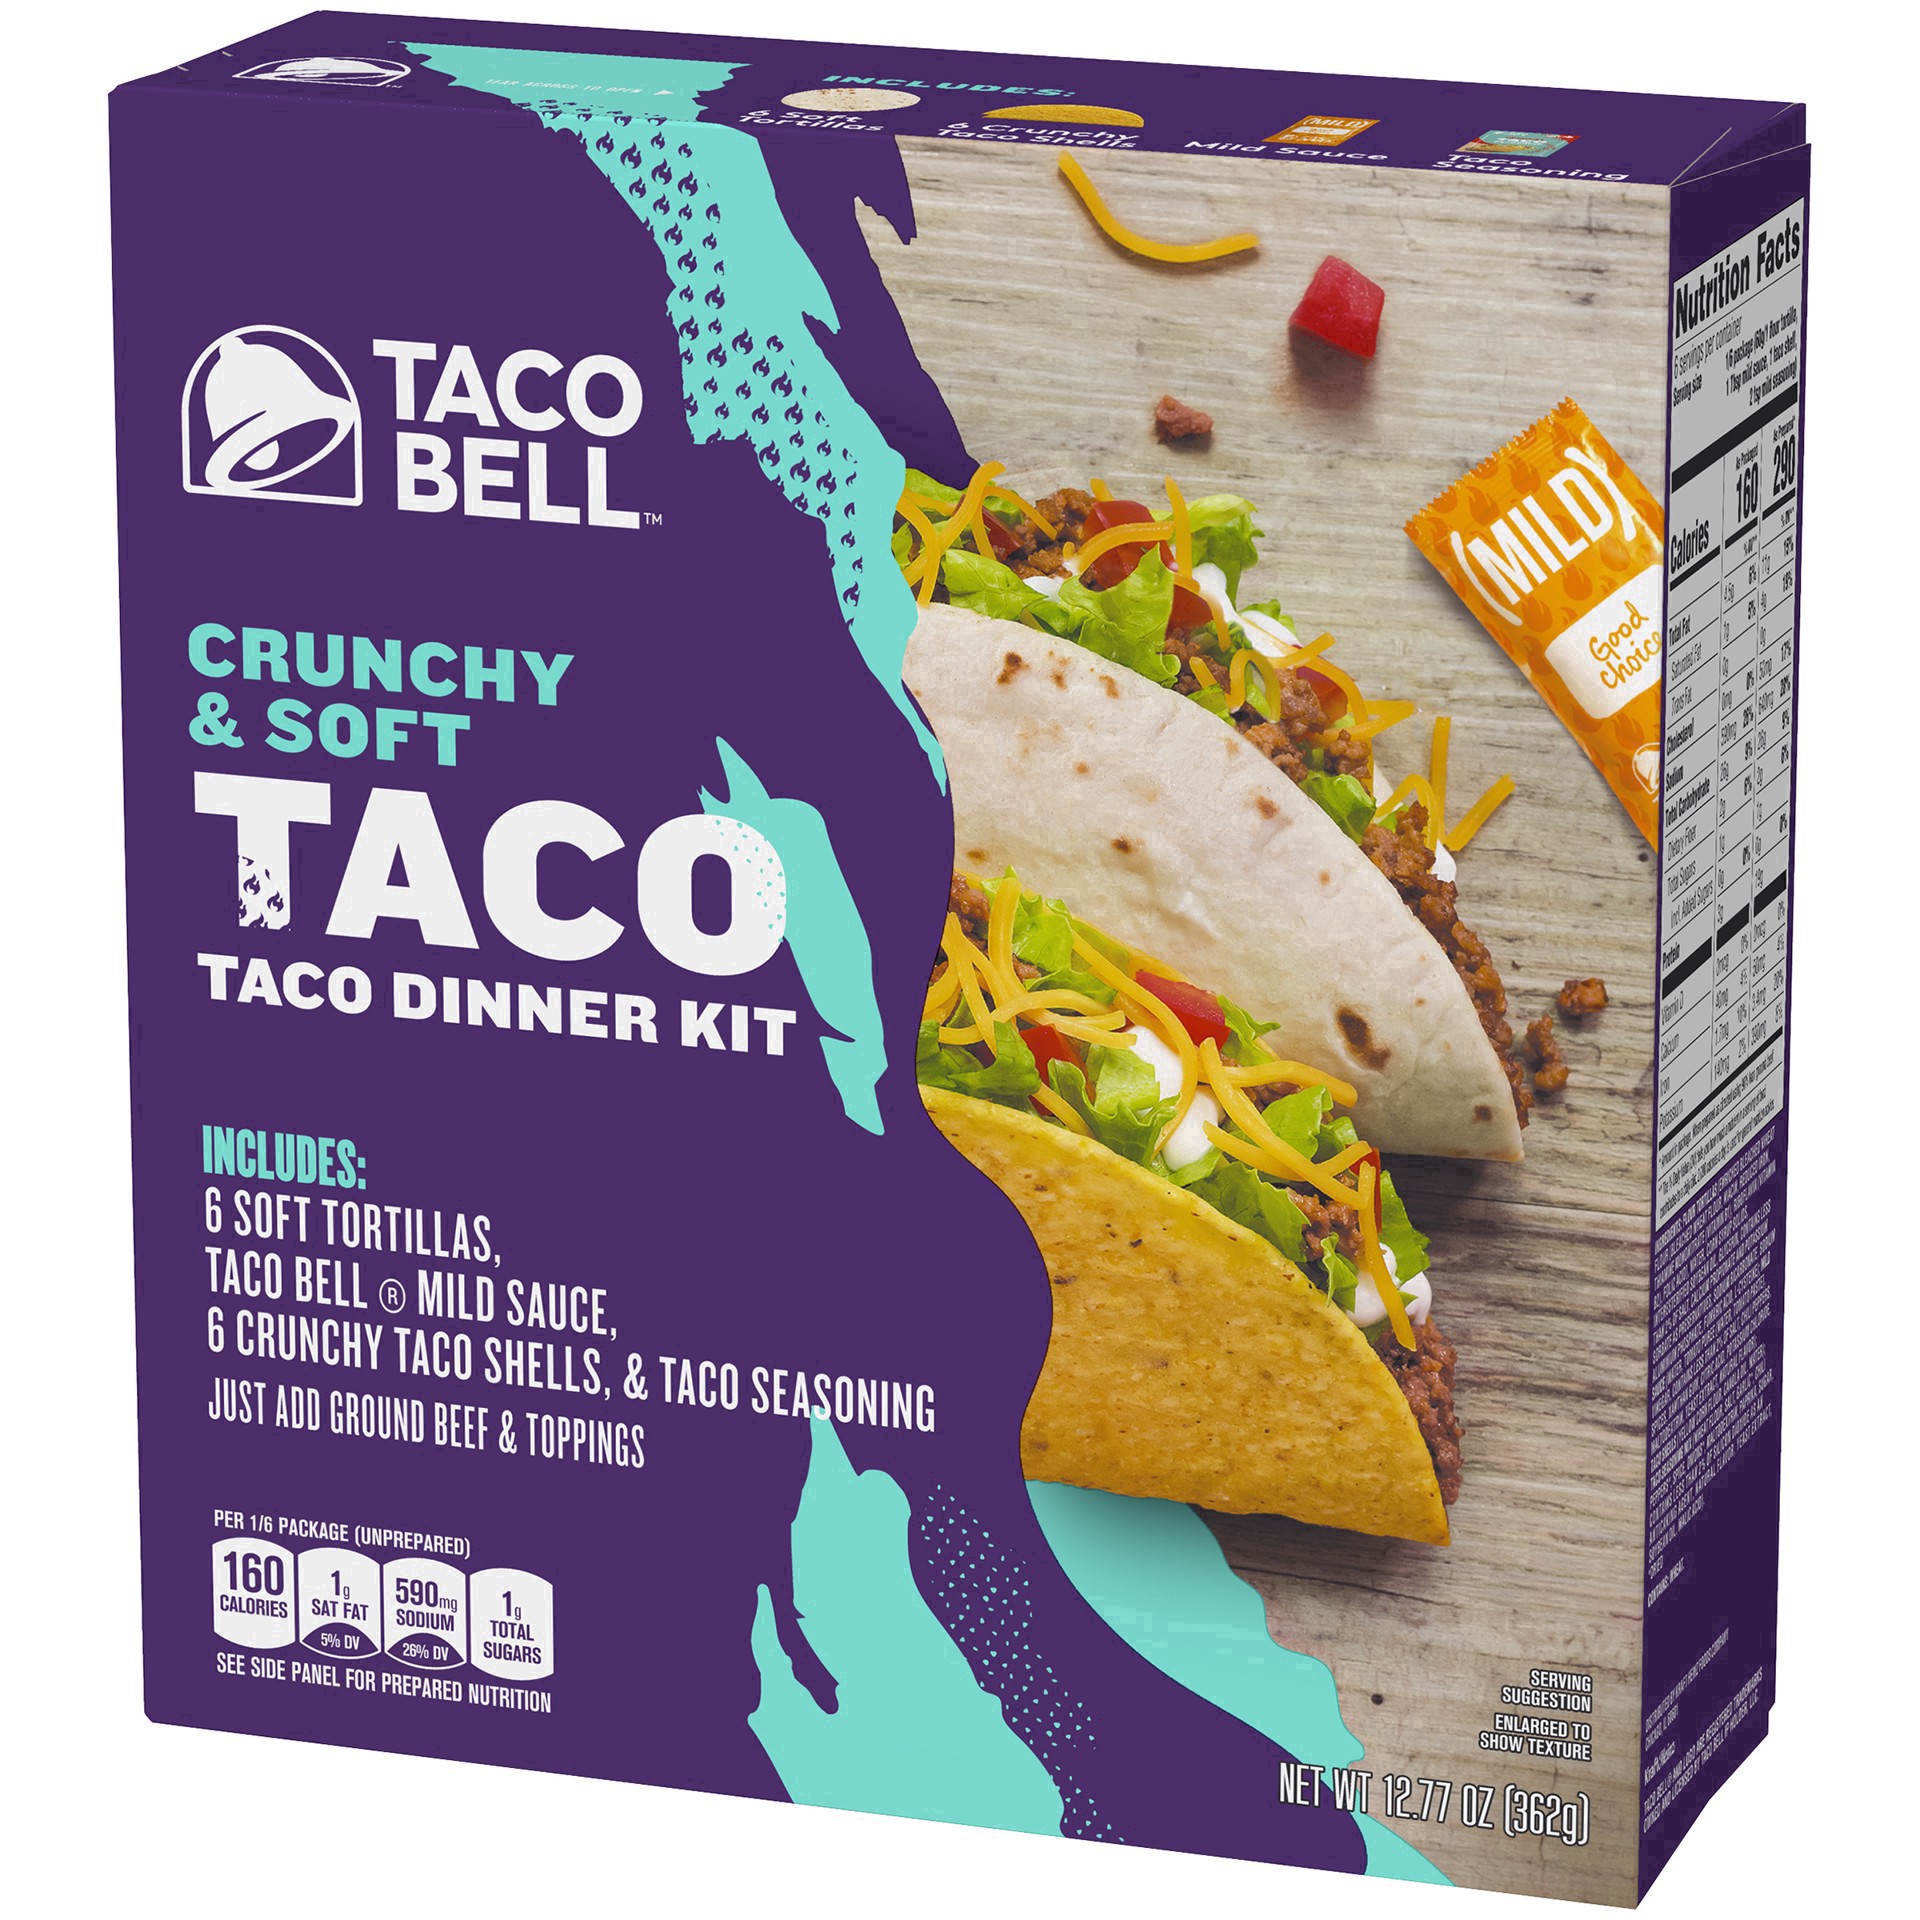 slide 25 of 101, Taco Bell Crunchy & Soft Taco Cravings Kit with 6 Soft Tortillas, 6 Crunchy Taco Shells, Taco Bell Mild Sauce & Seasoning, 12.77 oz Box, 1 ea